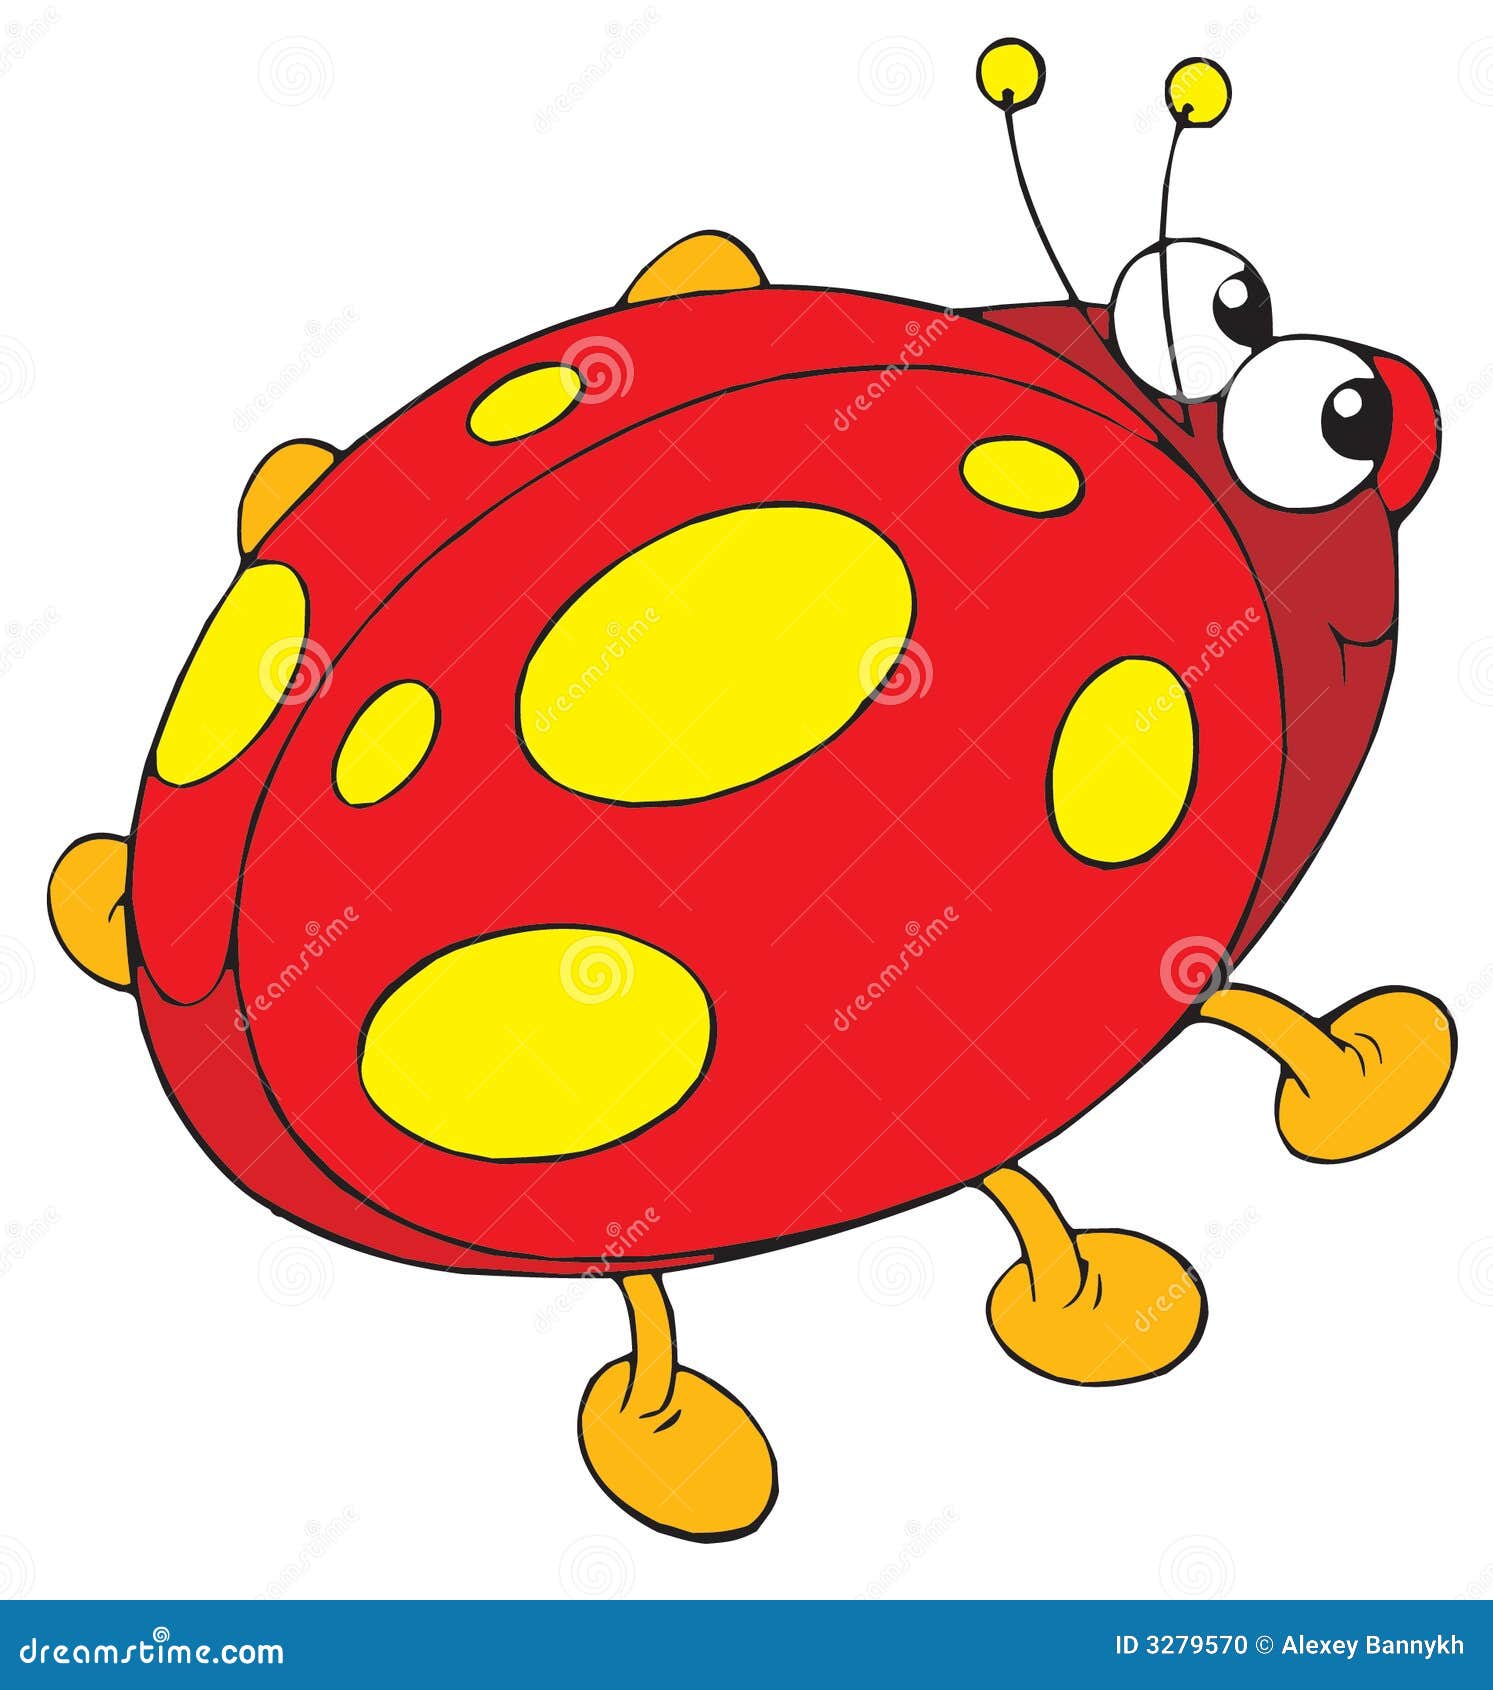 ladybug clipart vector - photo #43